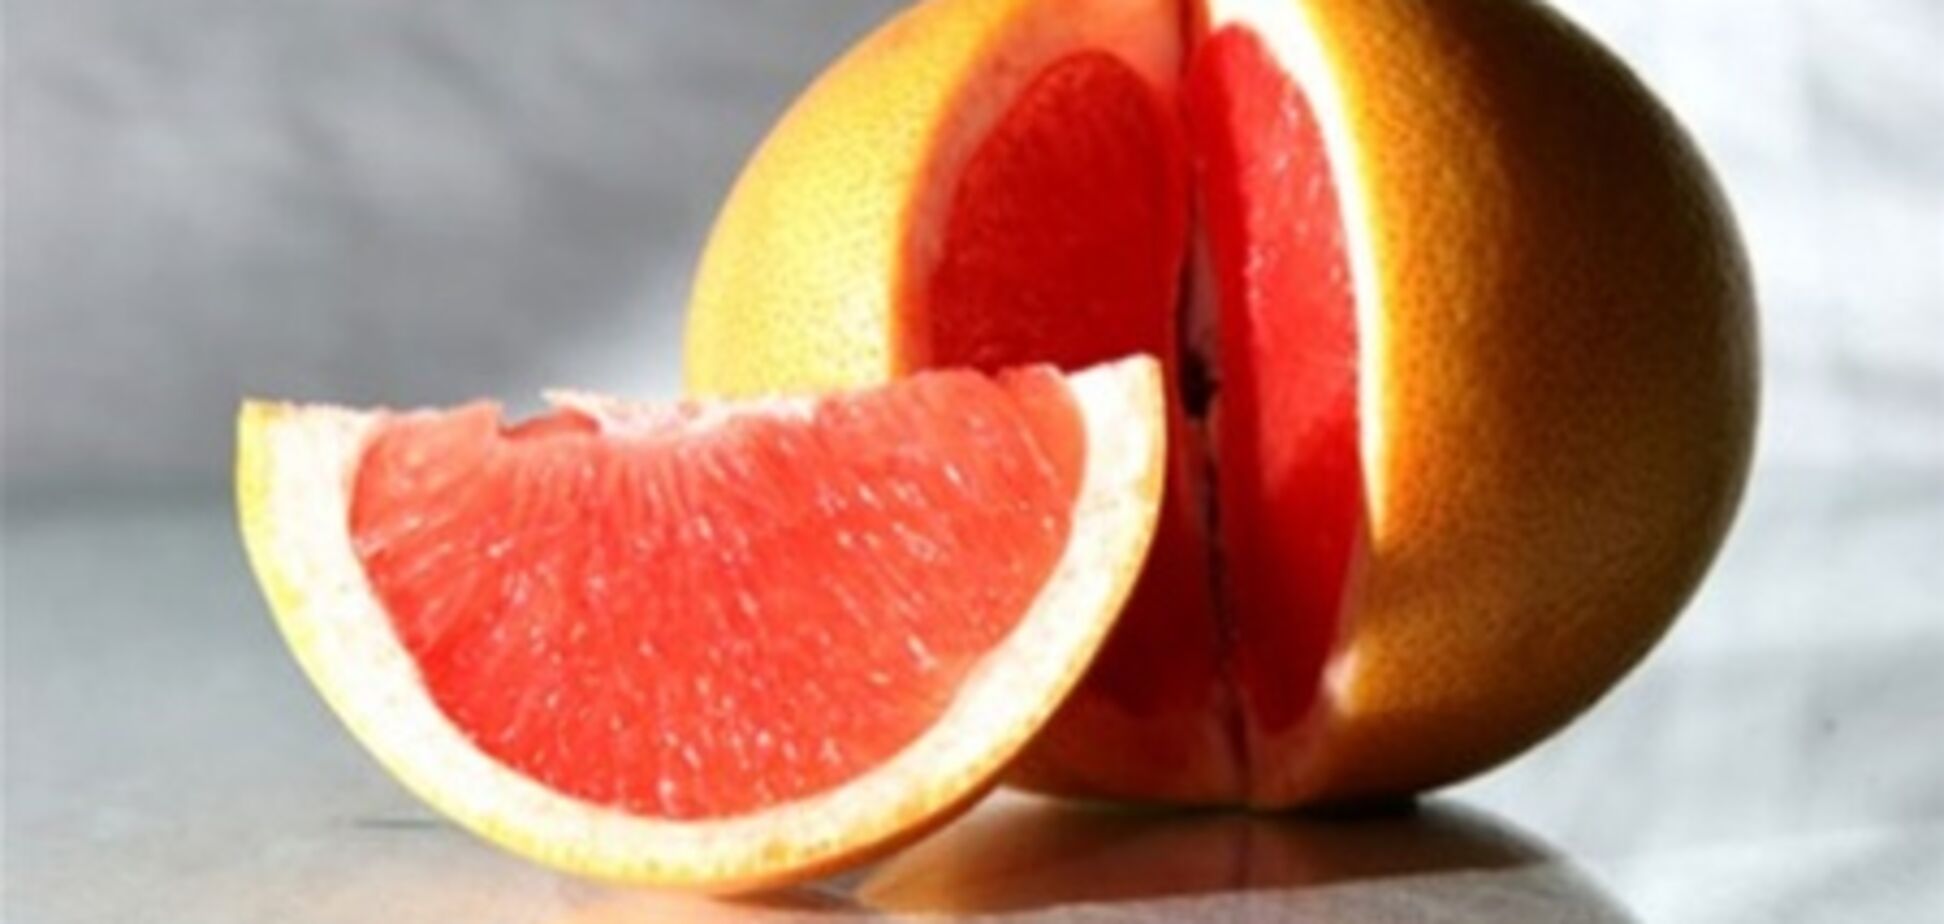 Грейпфруты повышают риск рака груди